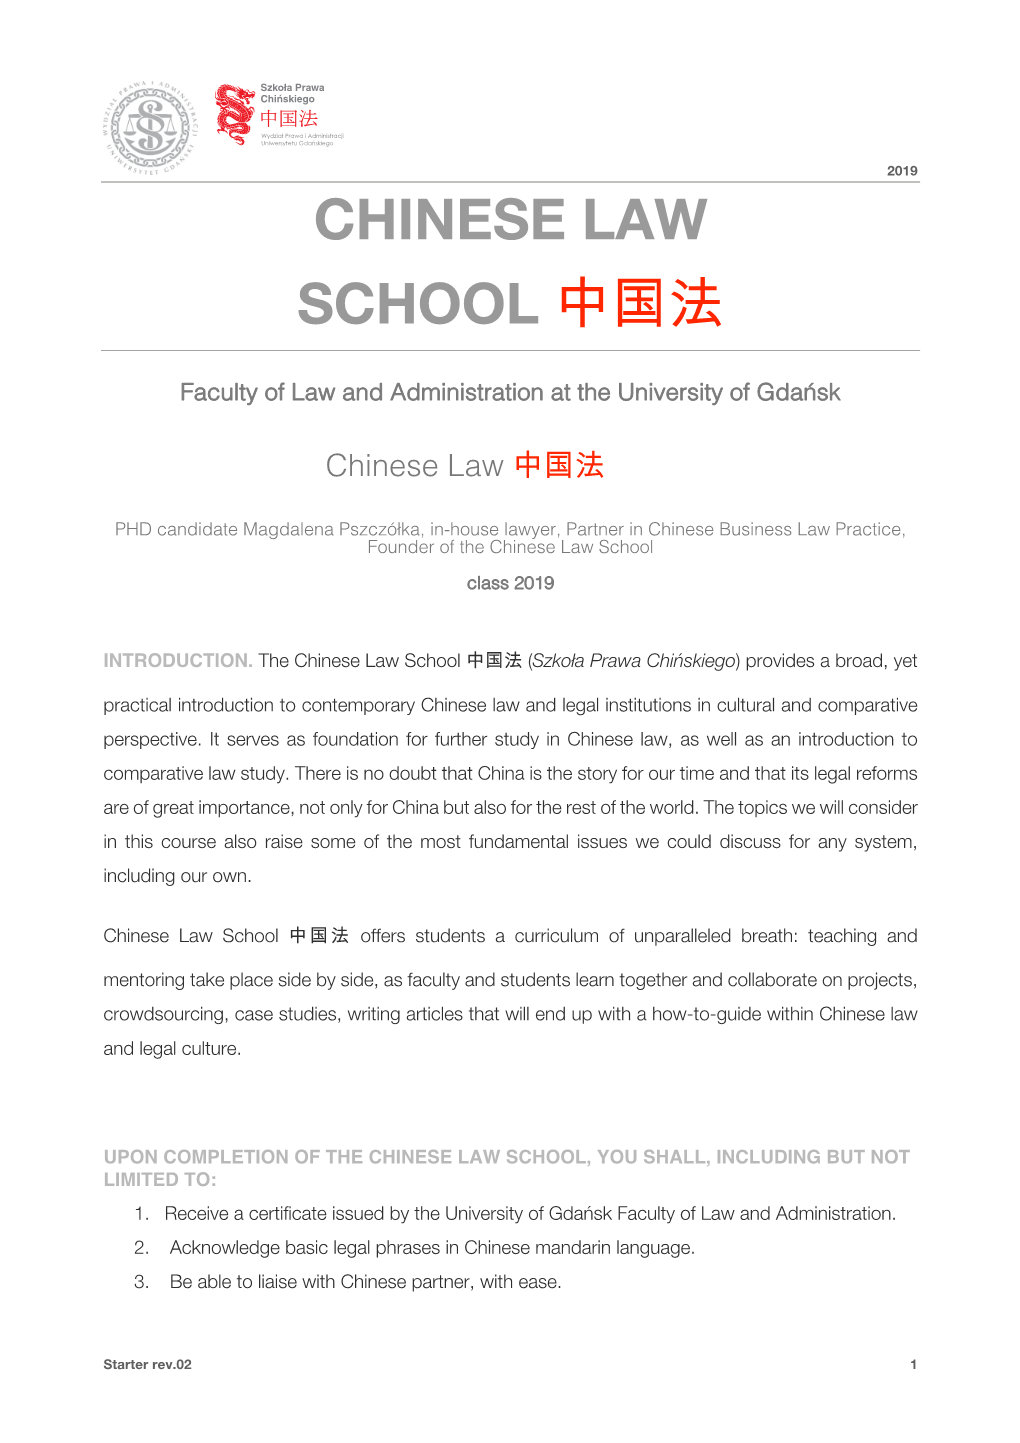 Chinese Law School 中国法